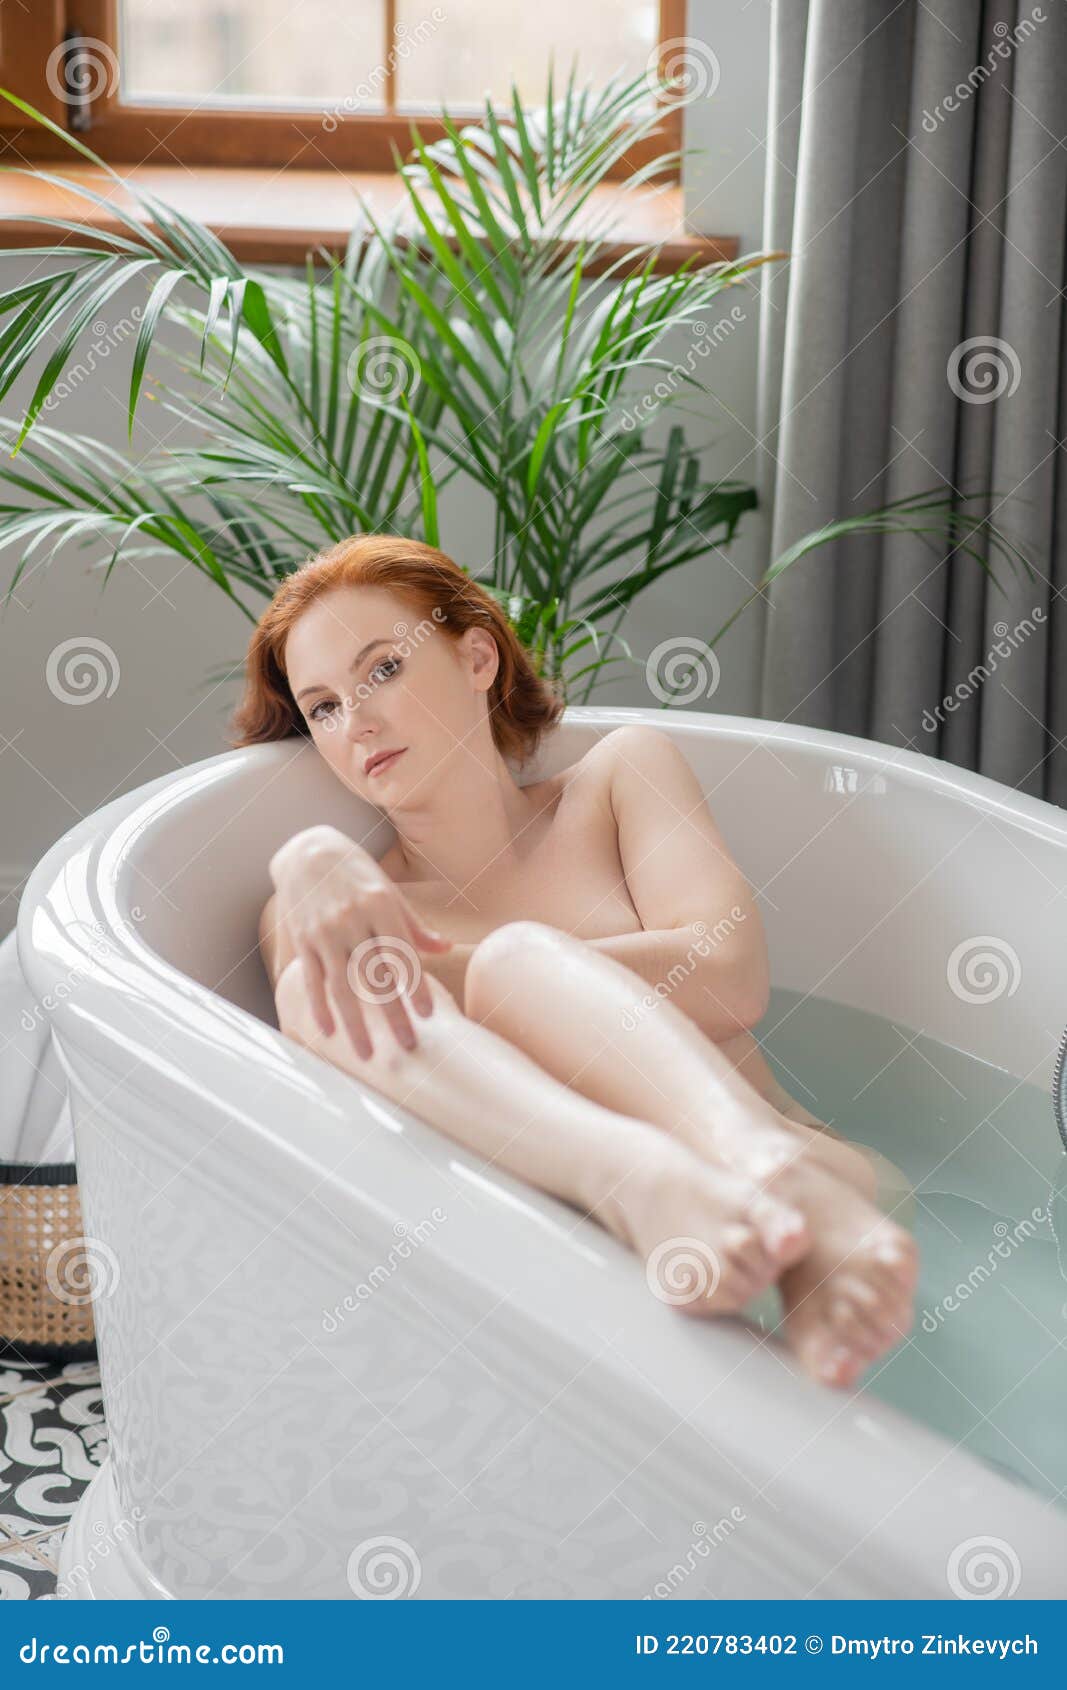 dan tillotson recommends Women In Bath Naked